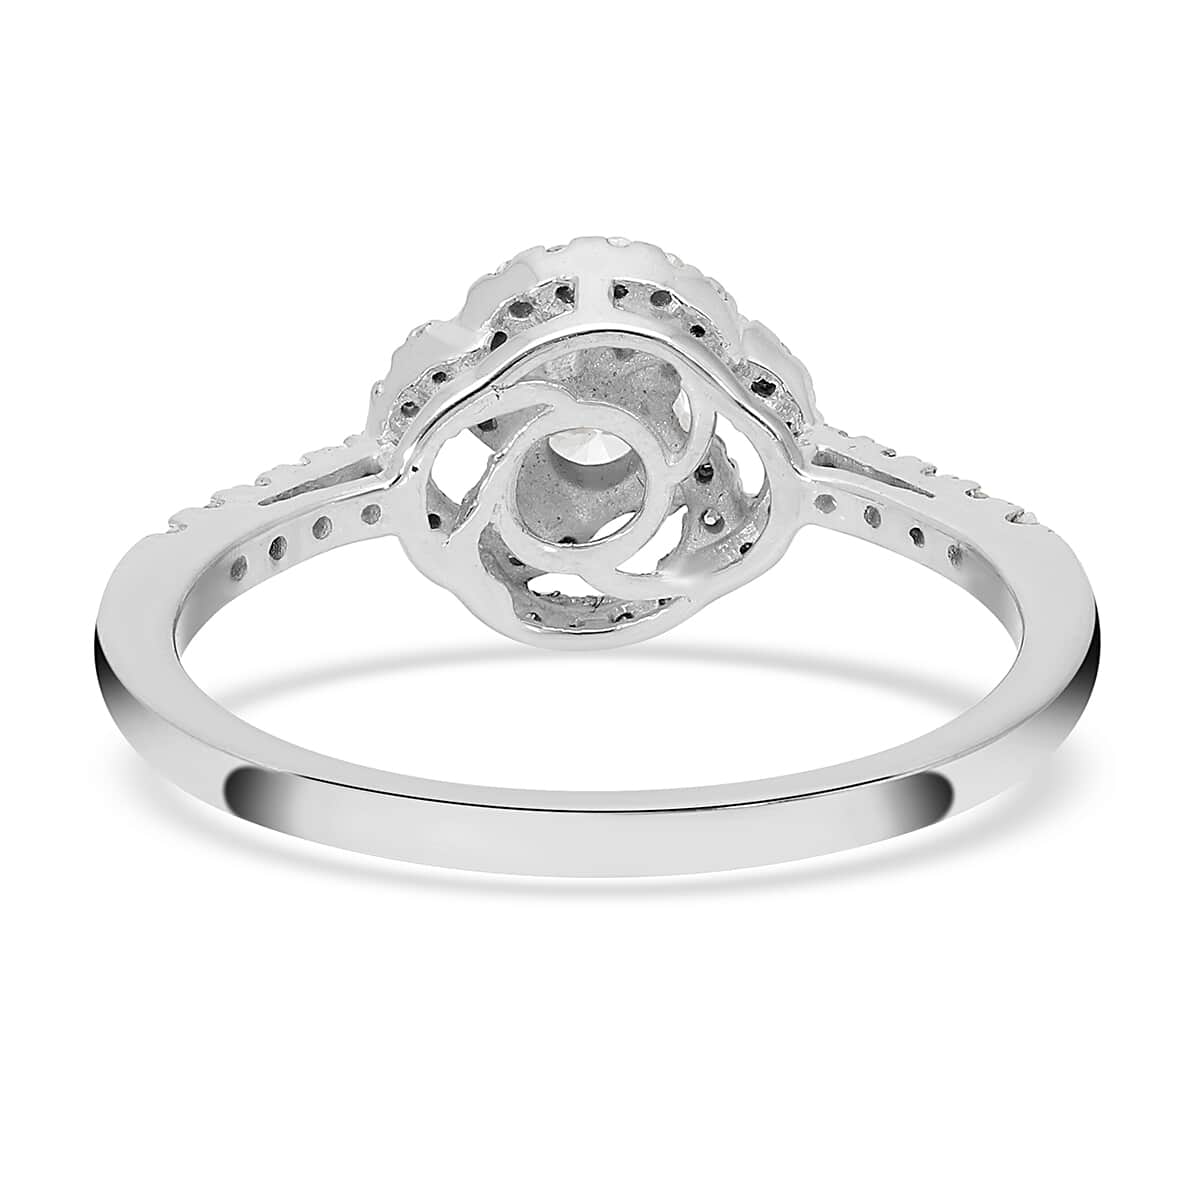 Luxoro 10K White Gold G-H I2-I3 Diamond Ring, Promise Rings (Size 7.0) 0.50 ctw image number 4